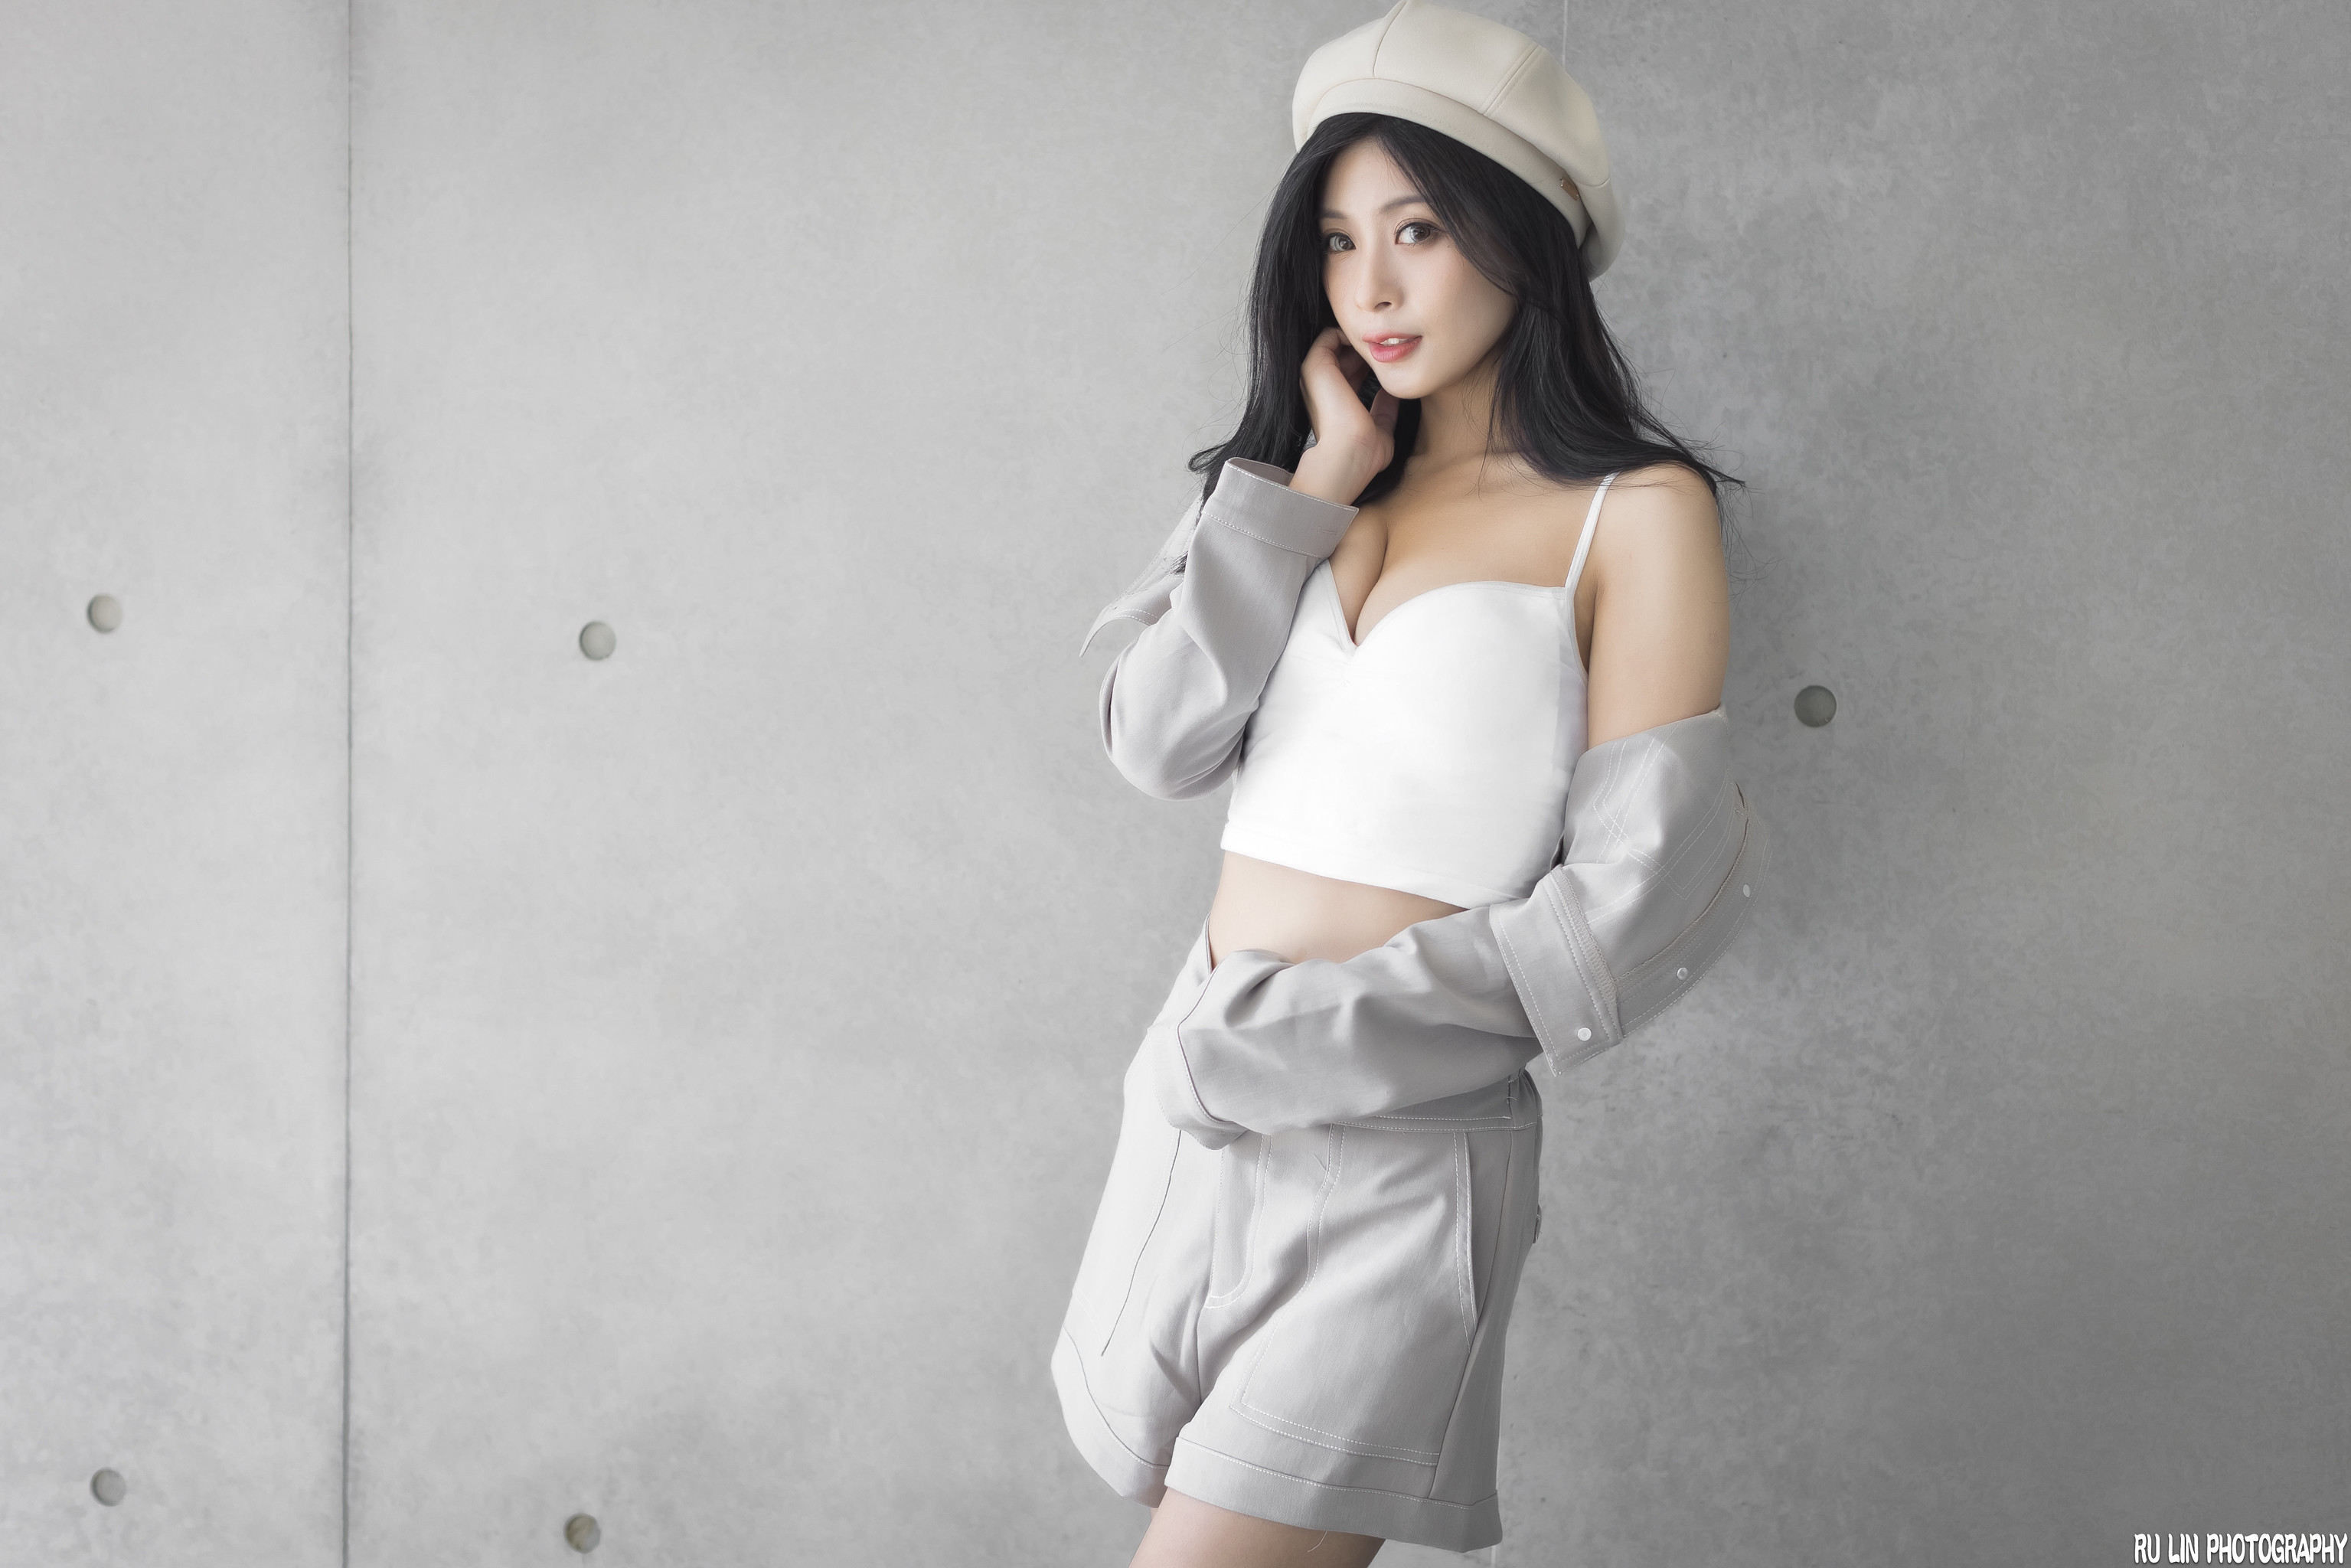 Ru Lin Women PinQ Asian Dark Hair Makeup Casual Wall Outdoors Grey Clothing White Clothing Berets To 3071x2048